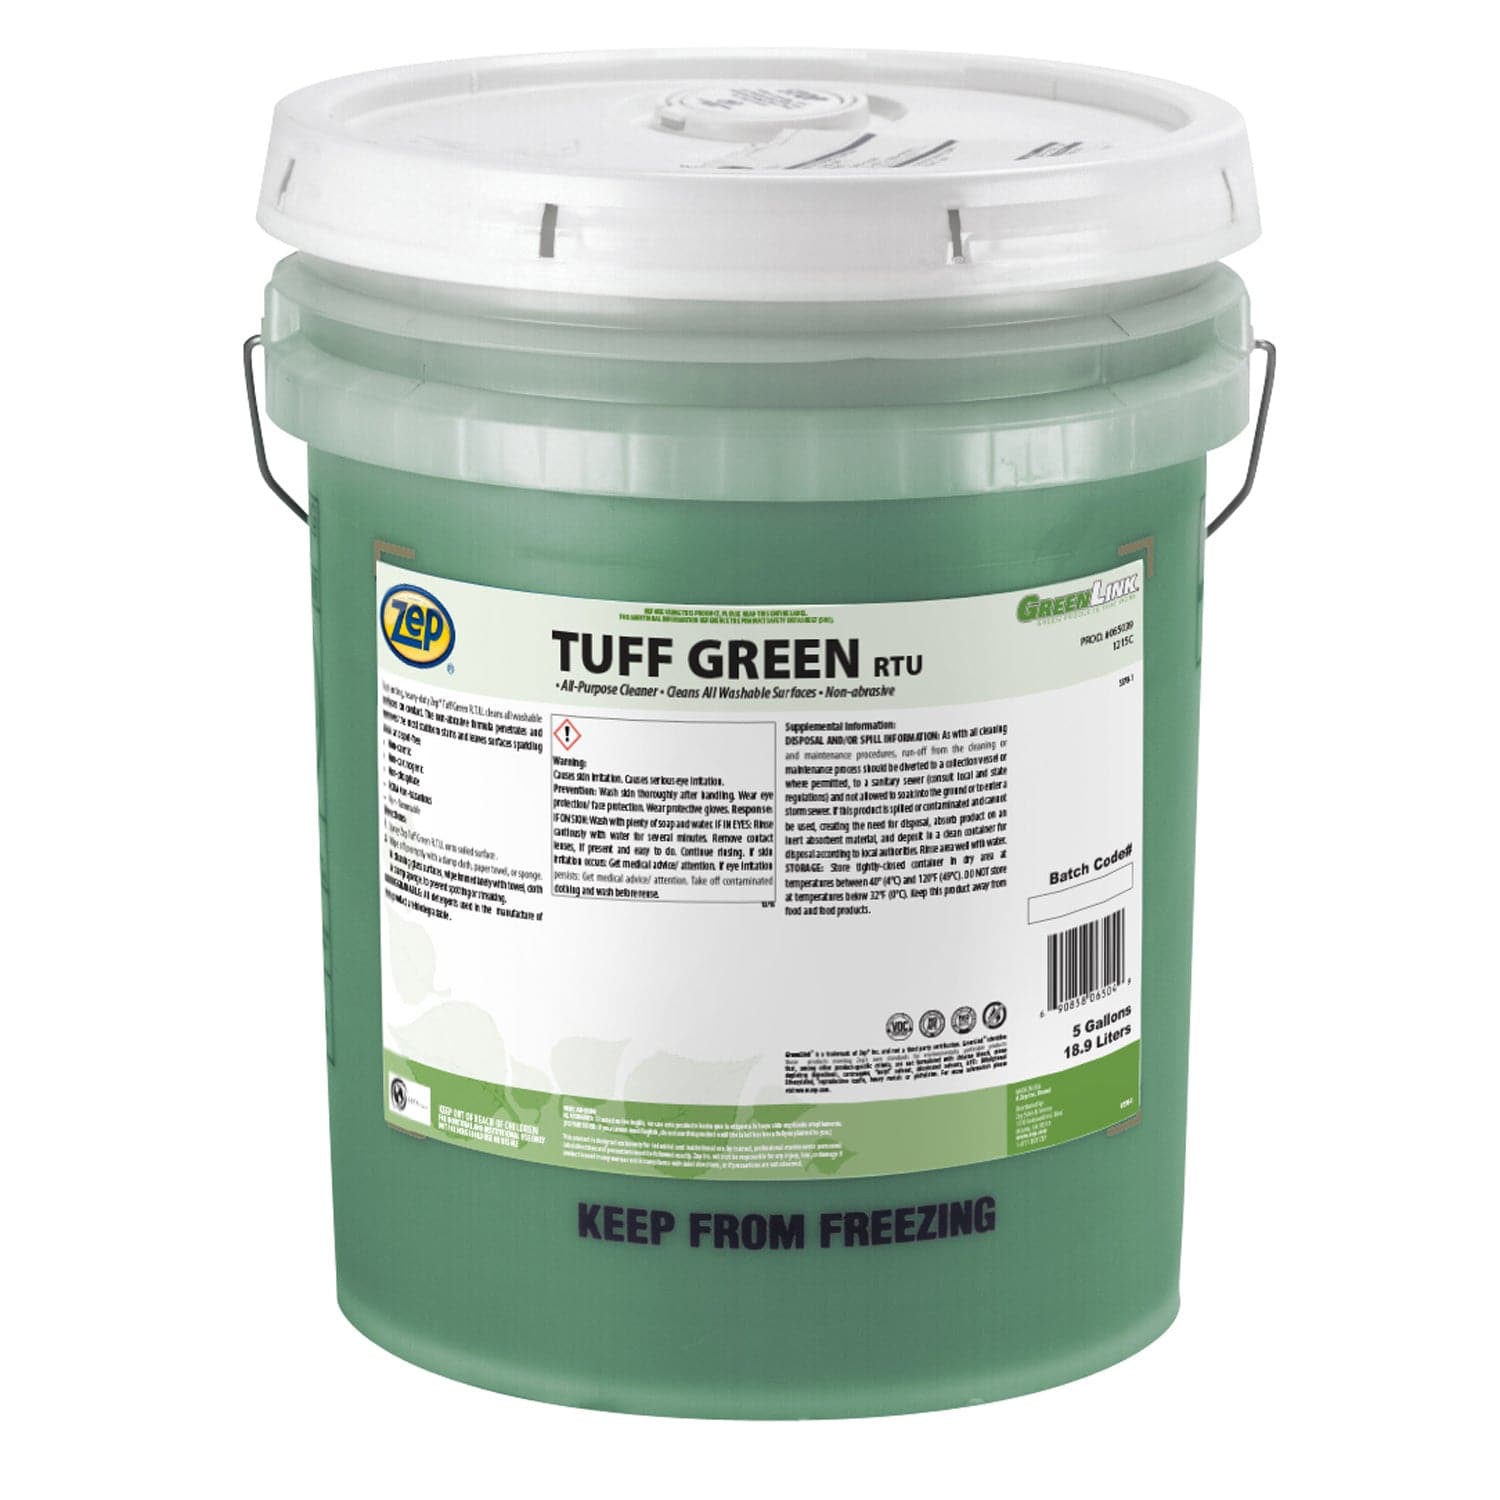 Image for Tuff Green - 5 Gallon